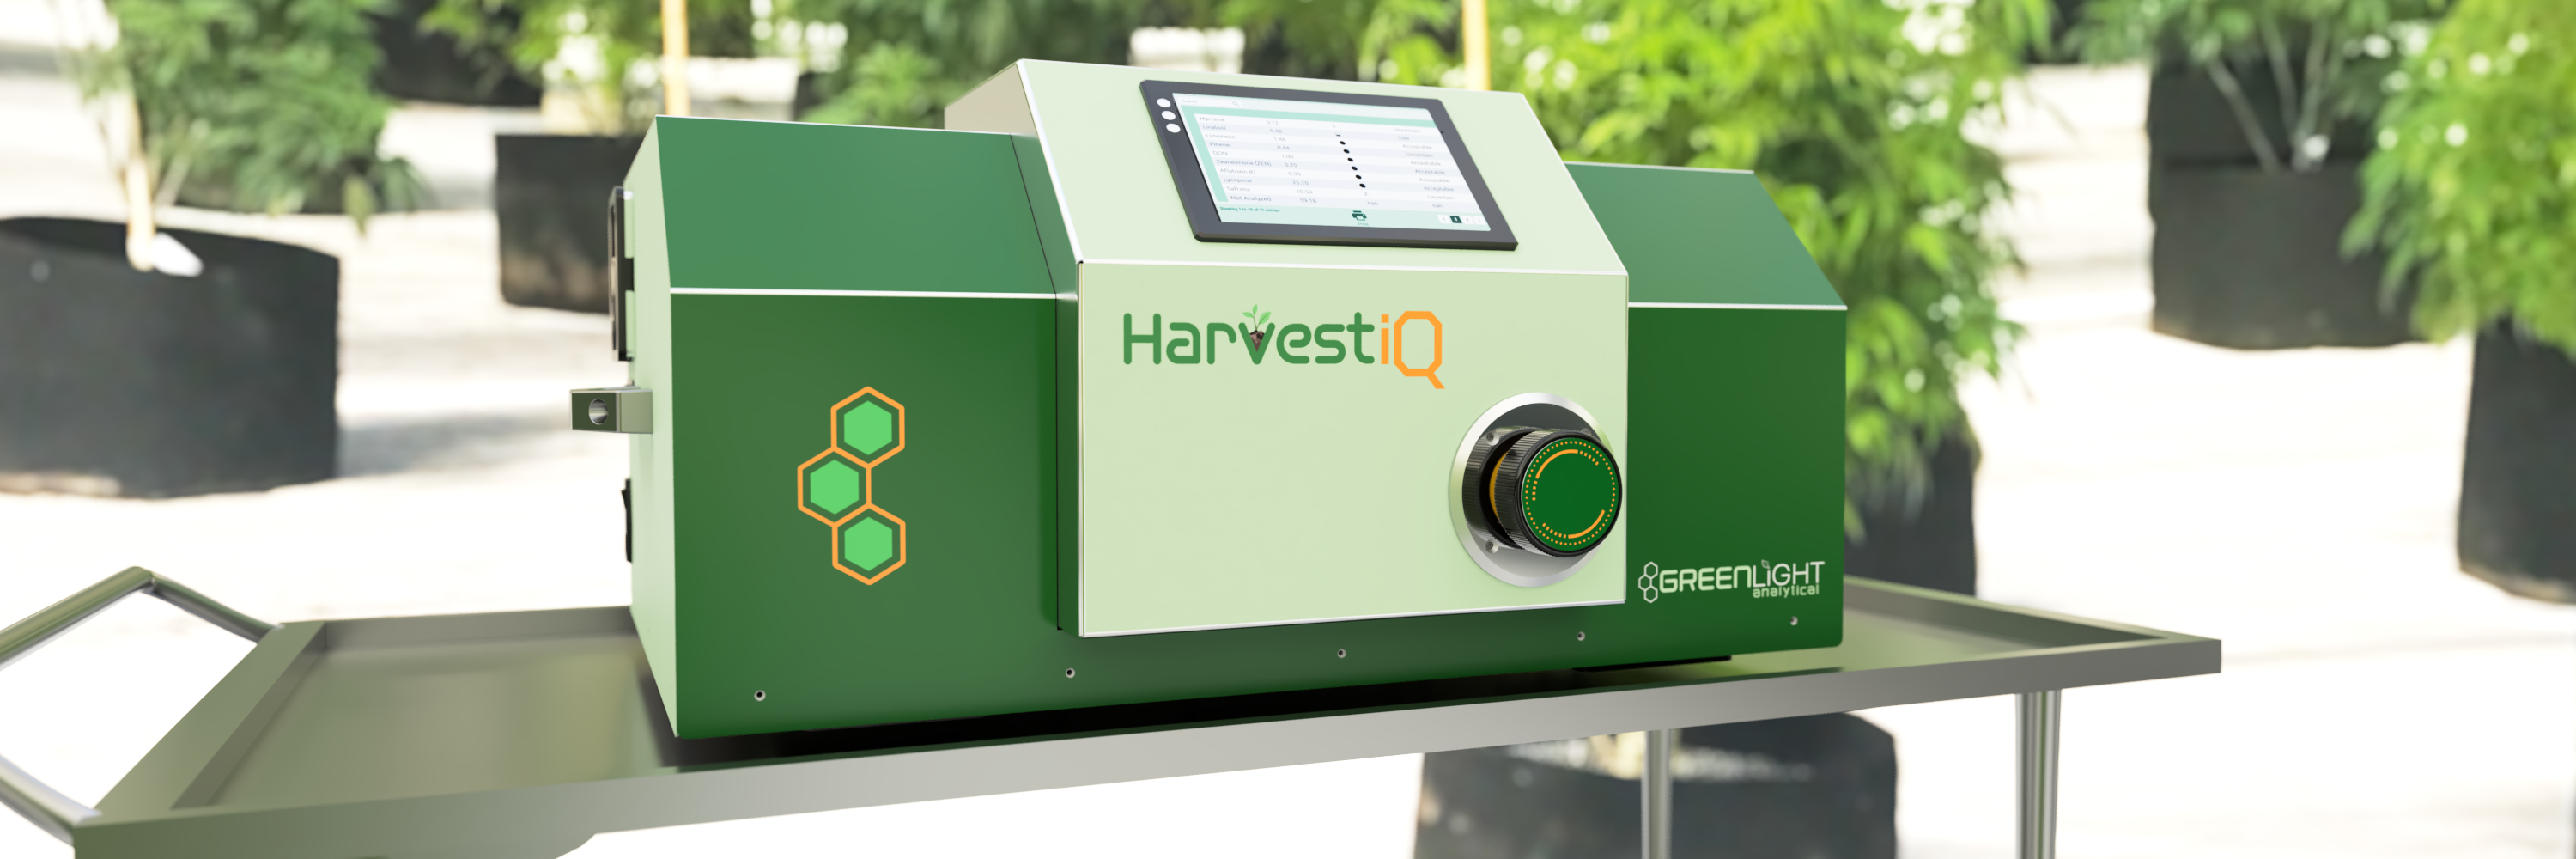 HarvestIQ by Greenlight Analytical